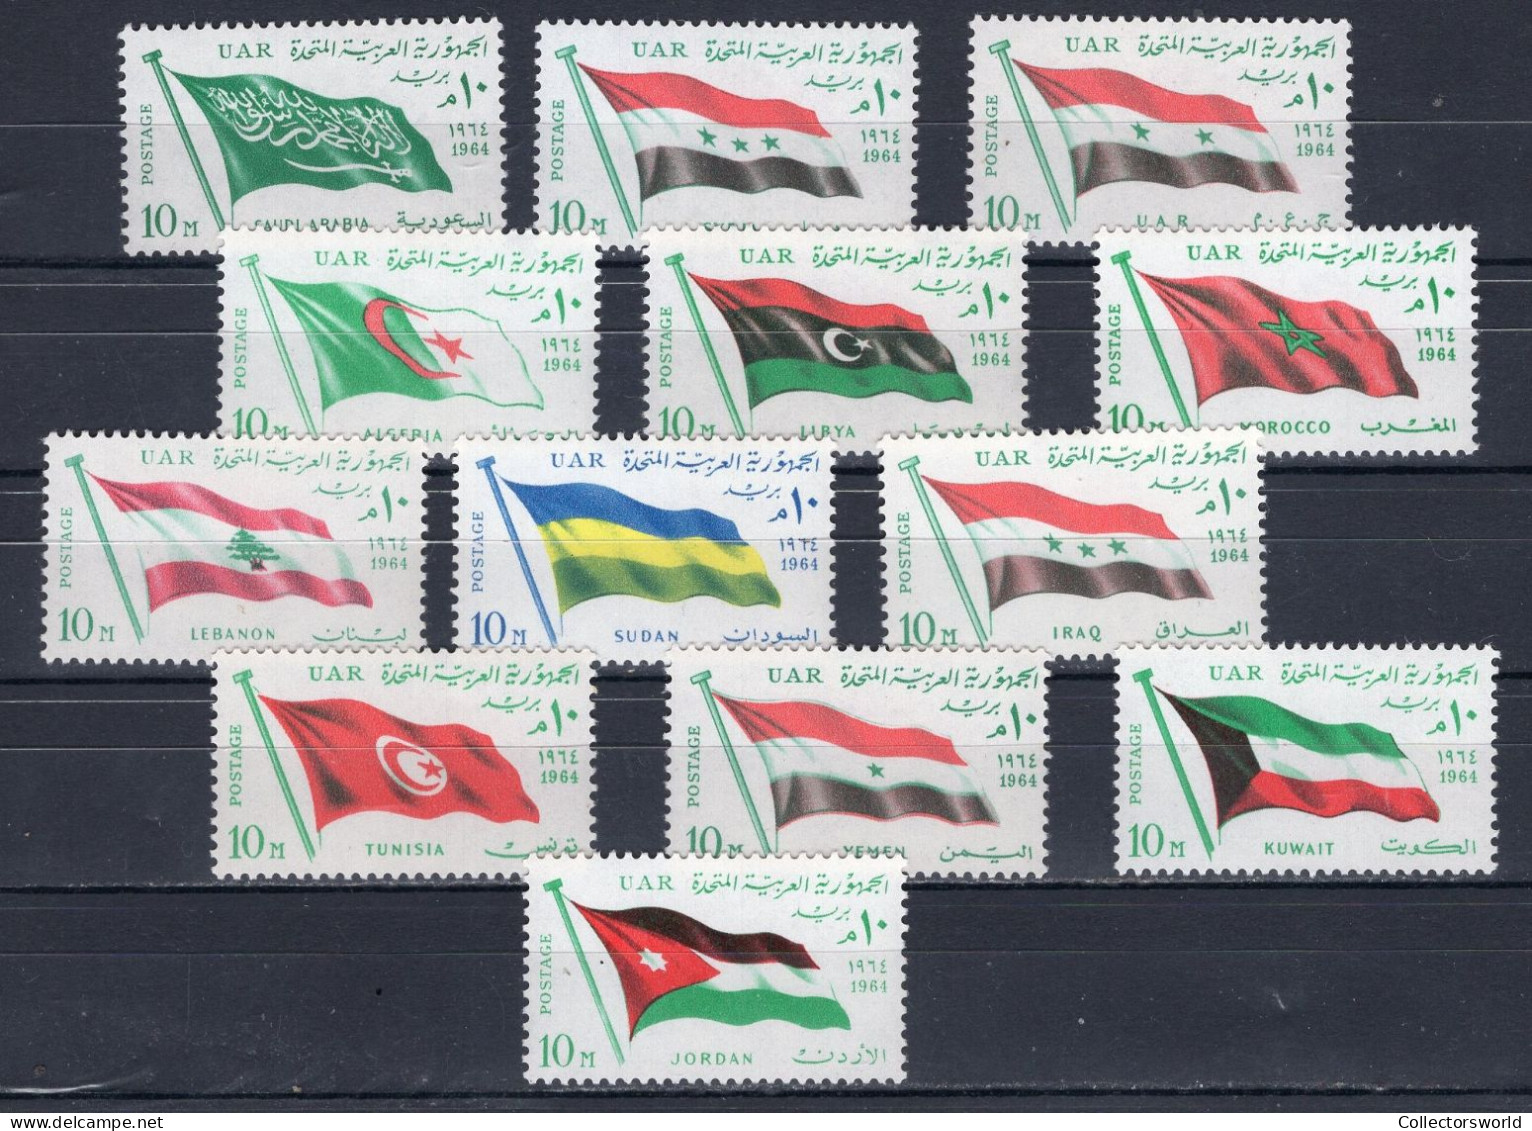 UAR United Arab Emirates Egypt 1964 Serie 13v Flags Arab League Summit MNH - Emirats Arabes Unis (Général)